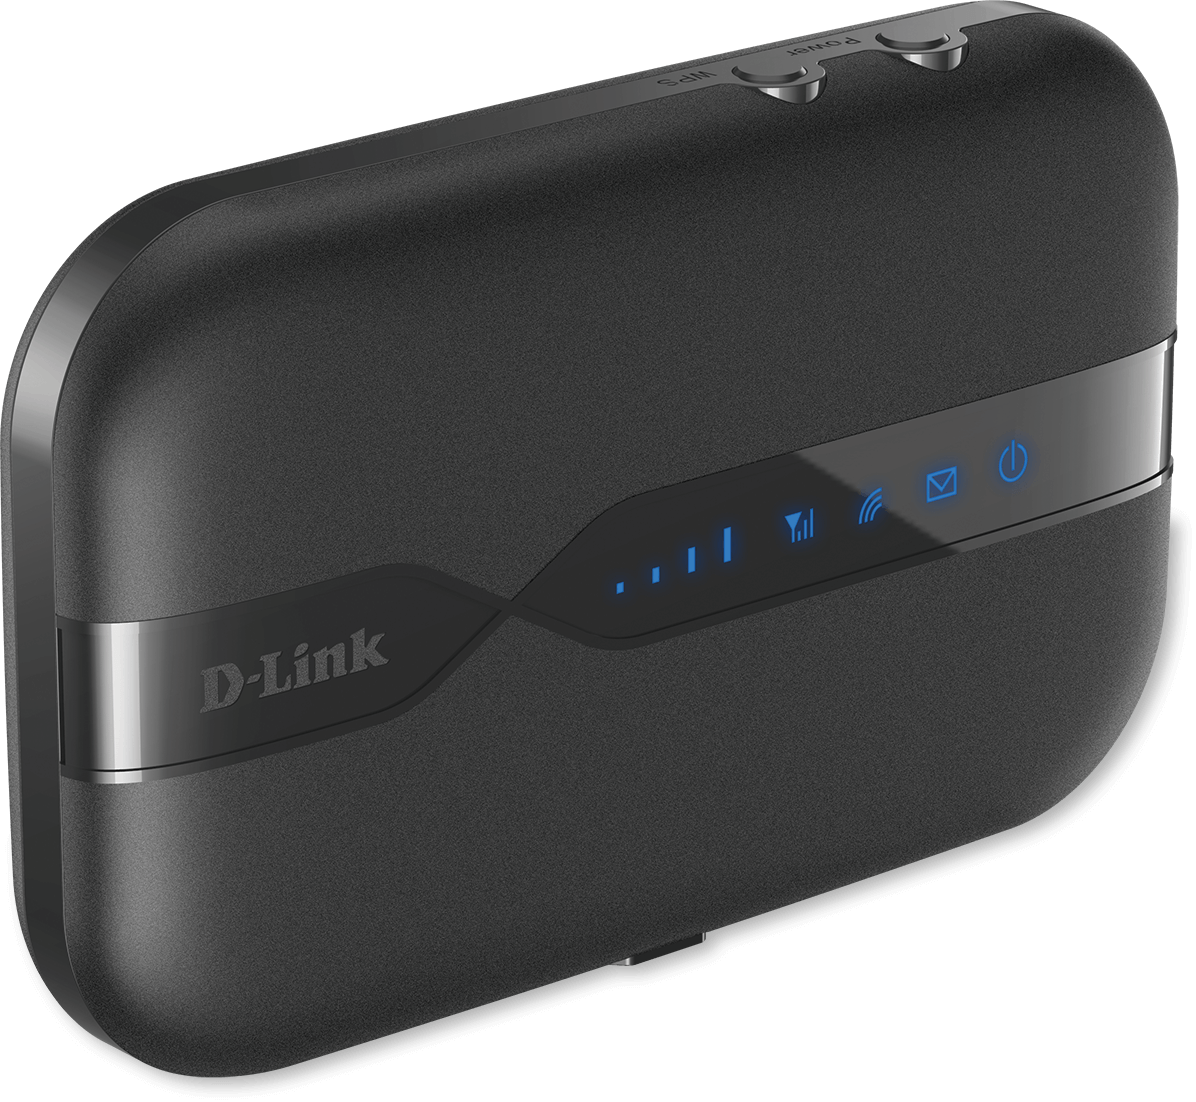 Horror Where Frank DWR-932 4G LTE Mobile Wi Fi Hotspot 150 Mbps | D-Link UK